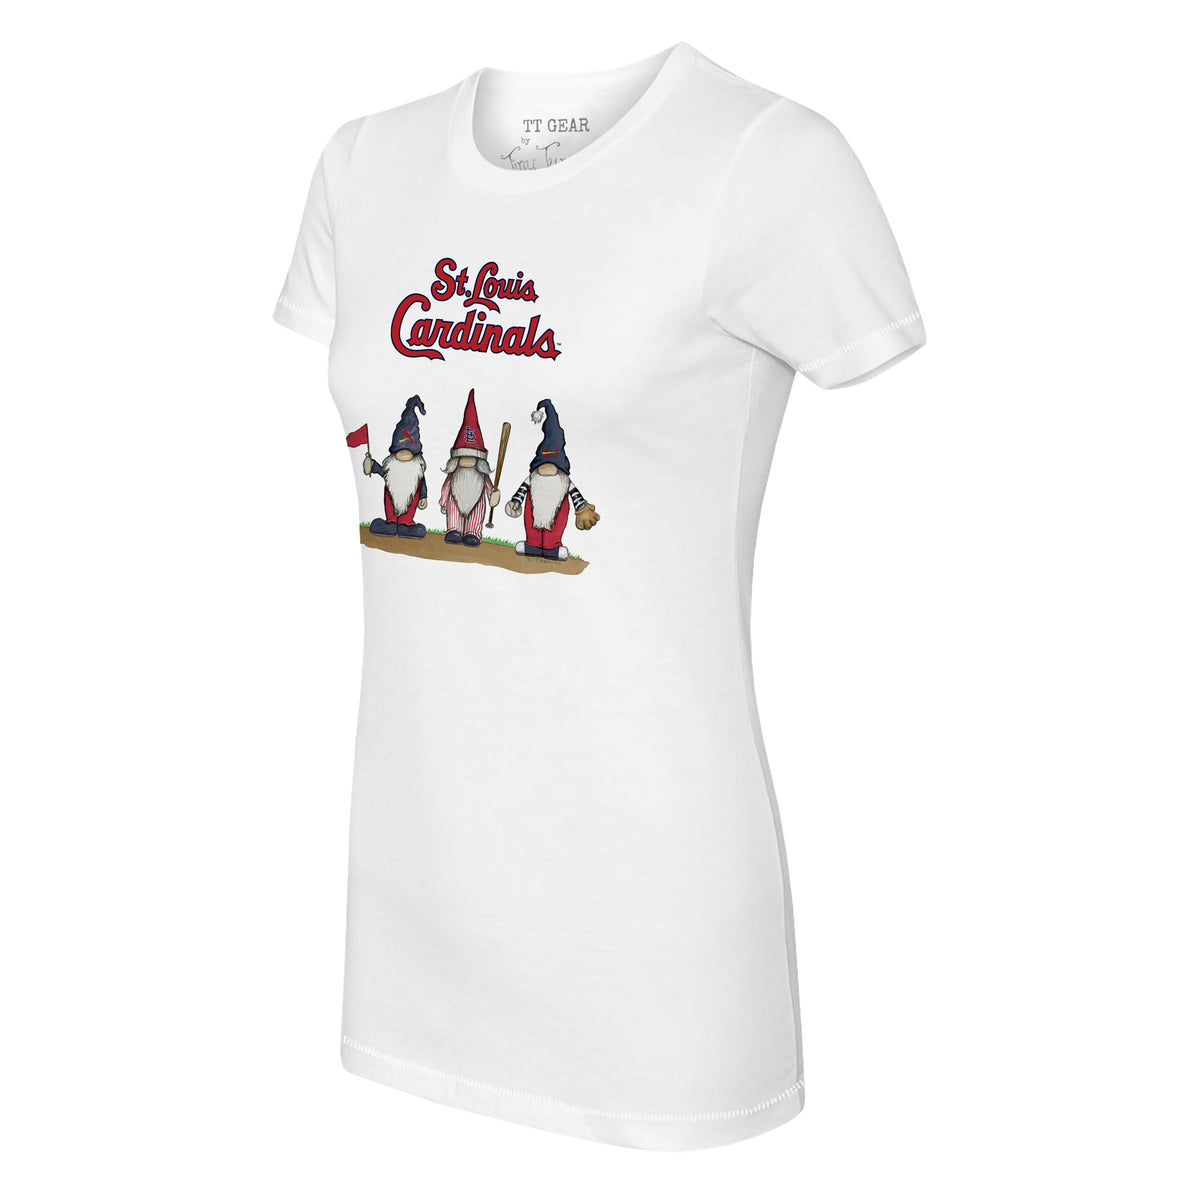 St. Louis Cardinals Gnomes Tee Shirt